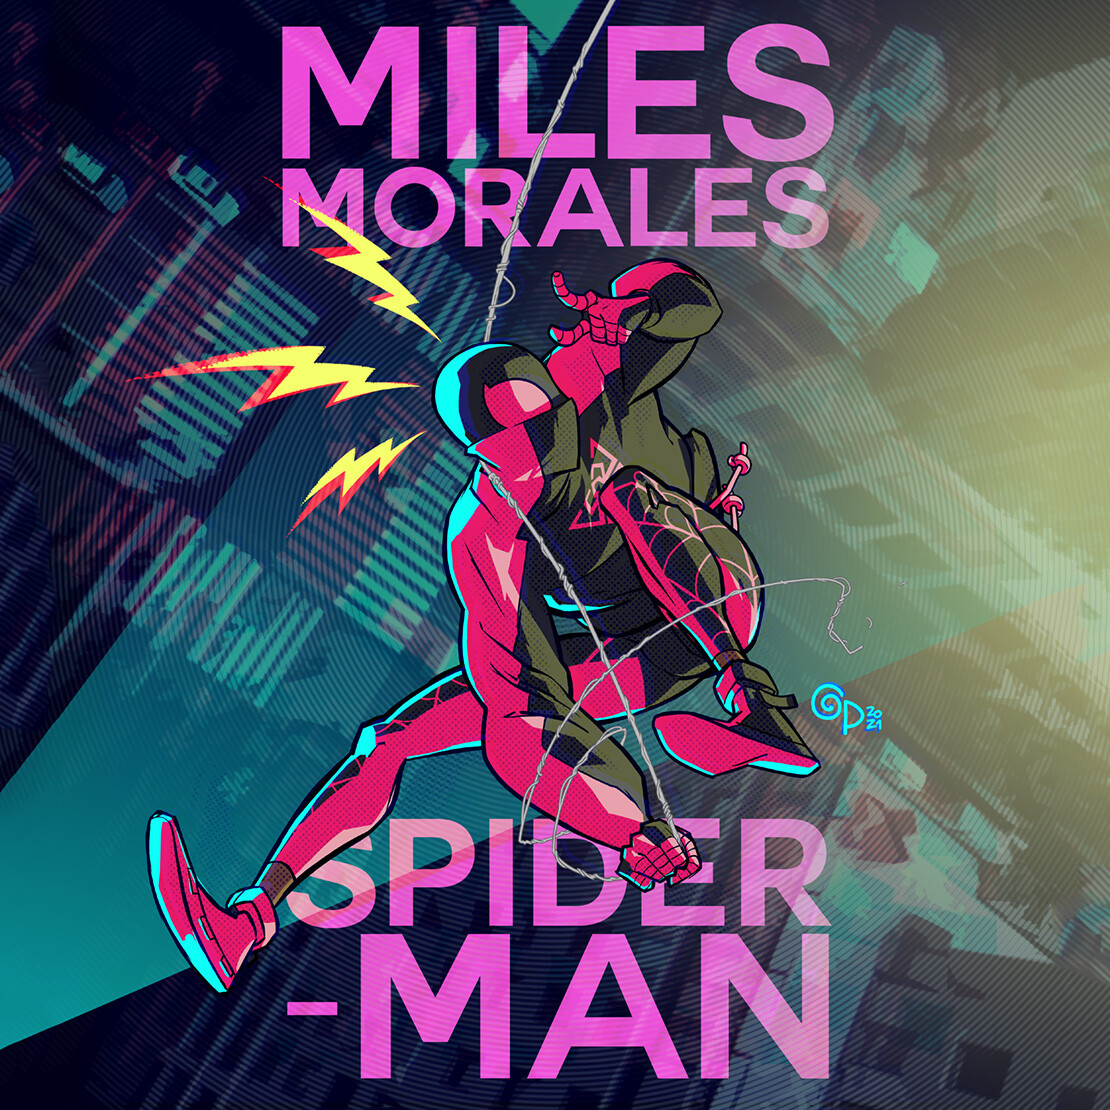 Miles Morales' new suit